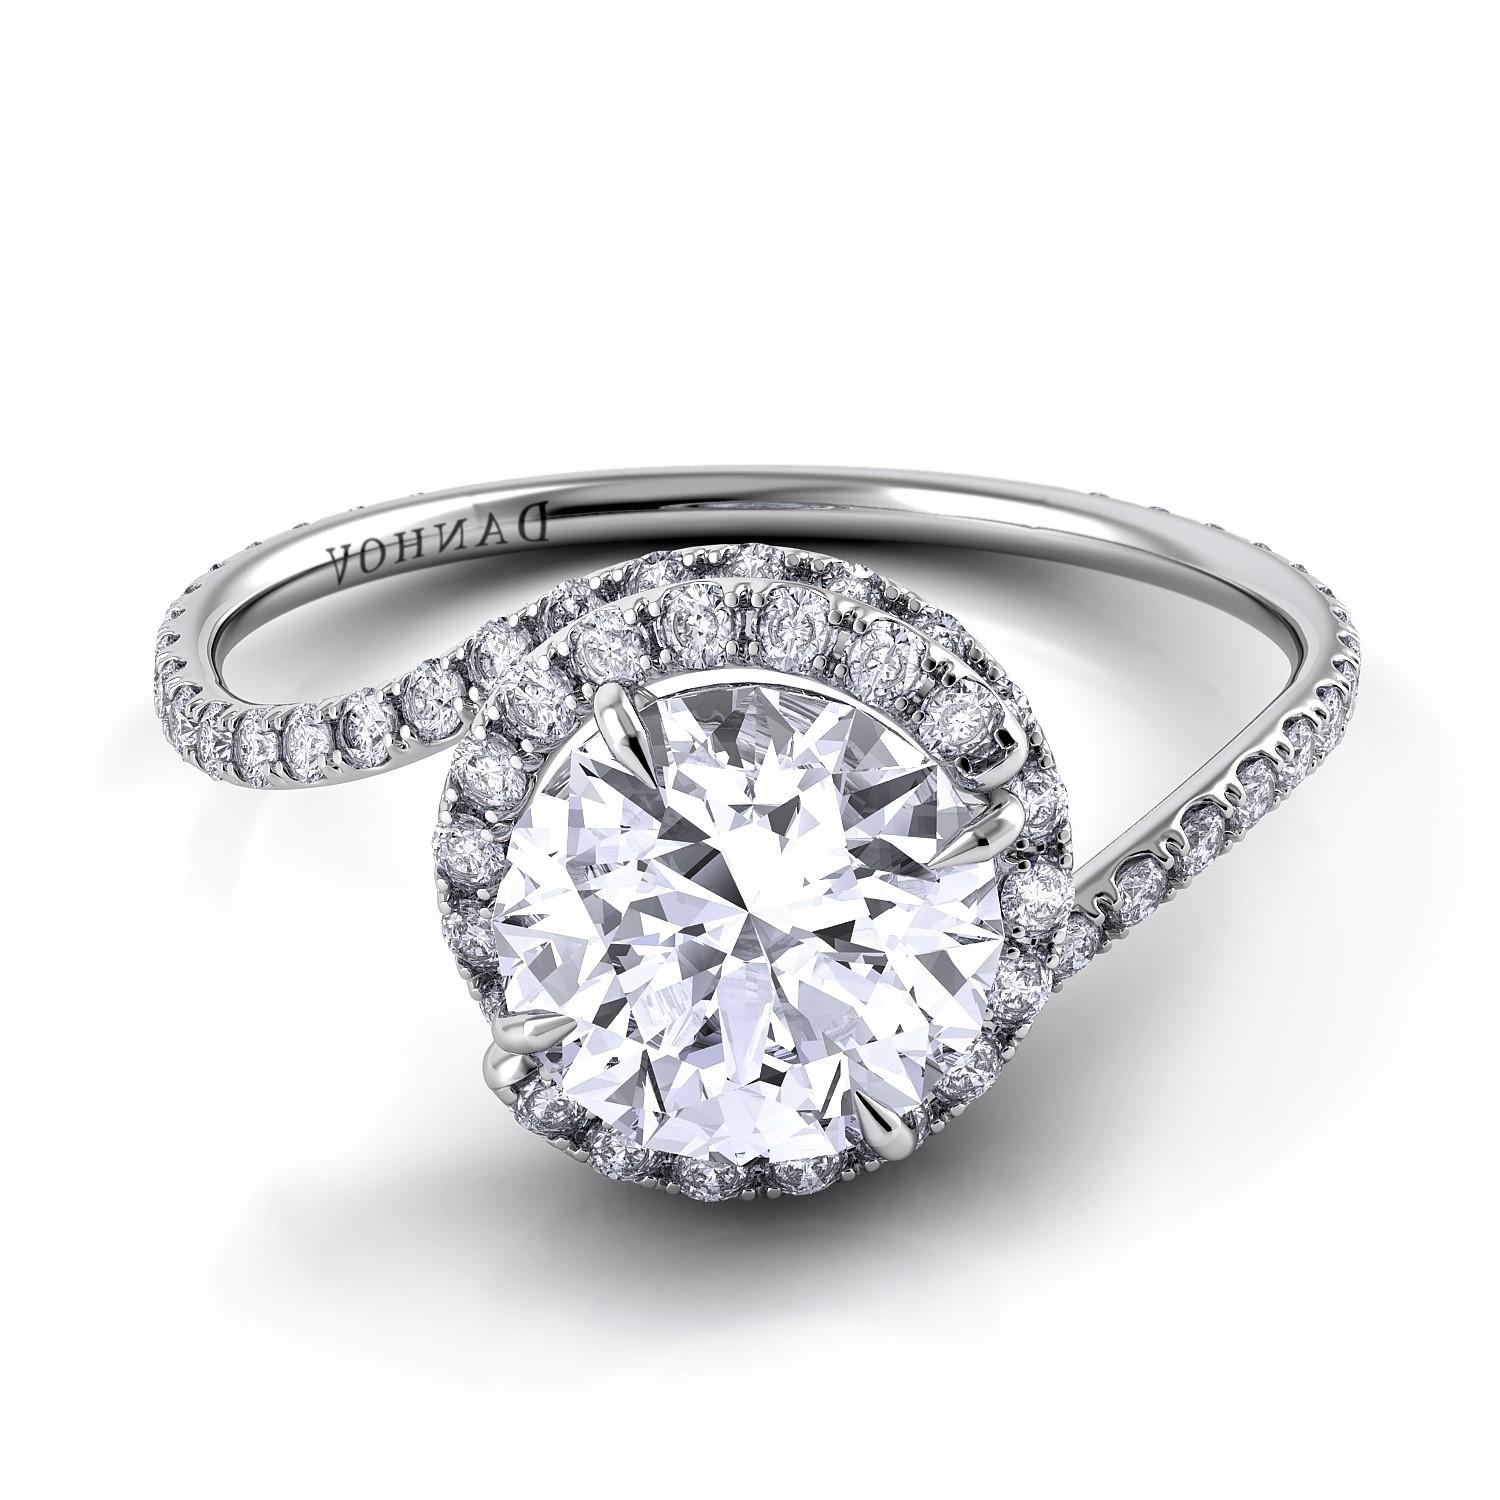 Danhov Abbraccio Award Winning Swirl Diamond Engagement Ring 'AE-100' For Sale 3